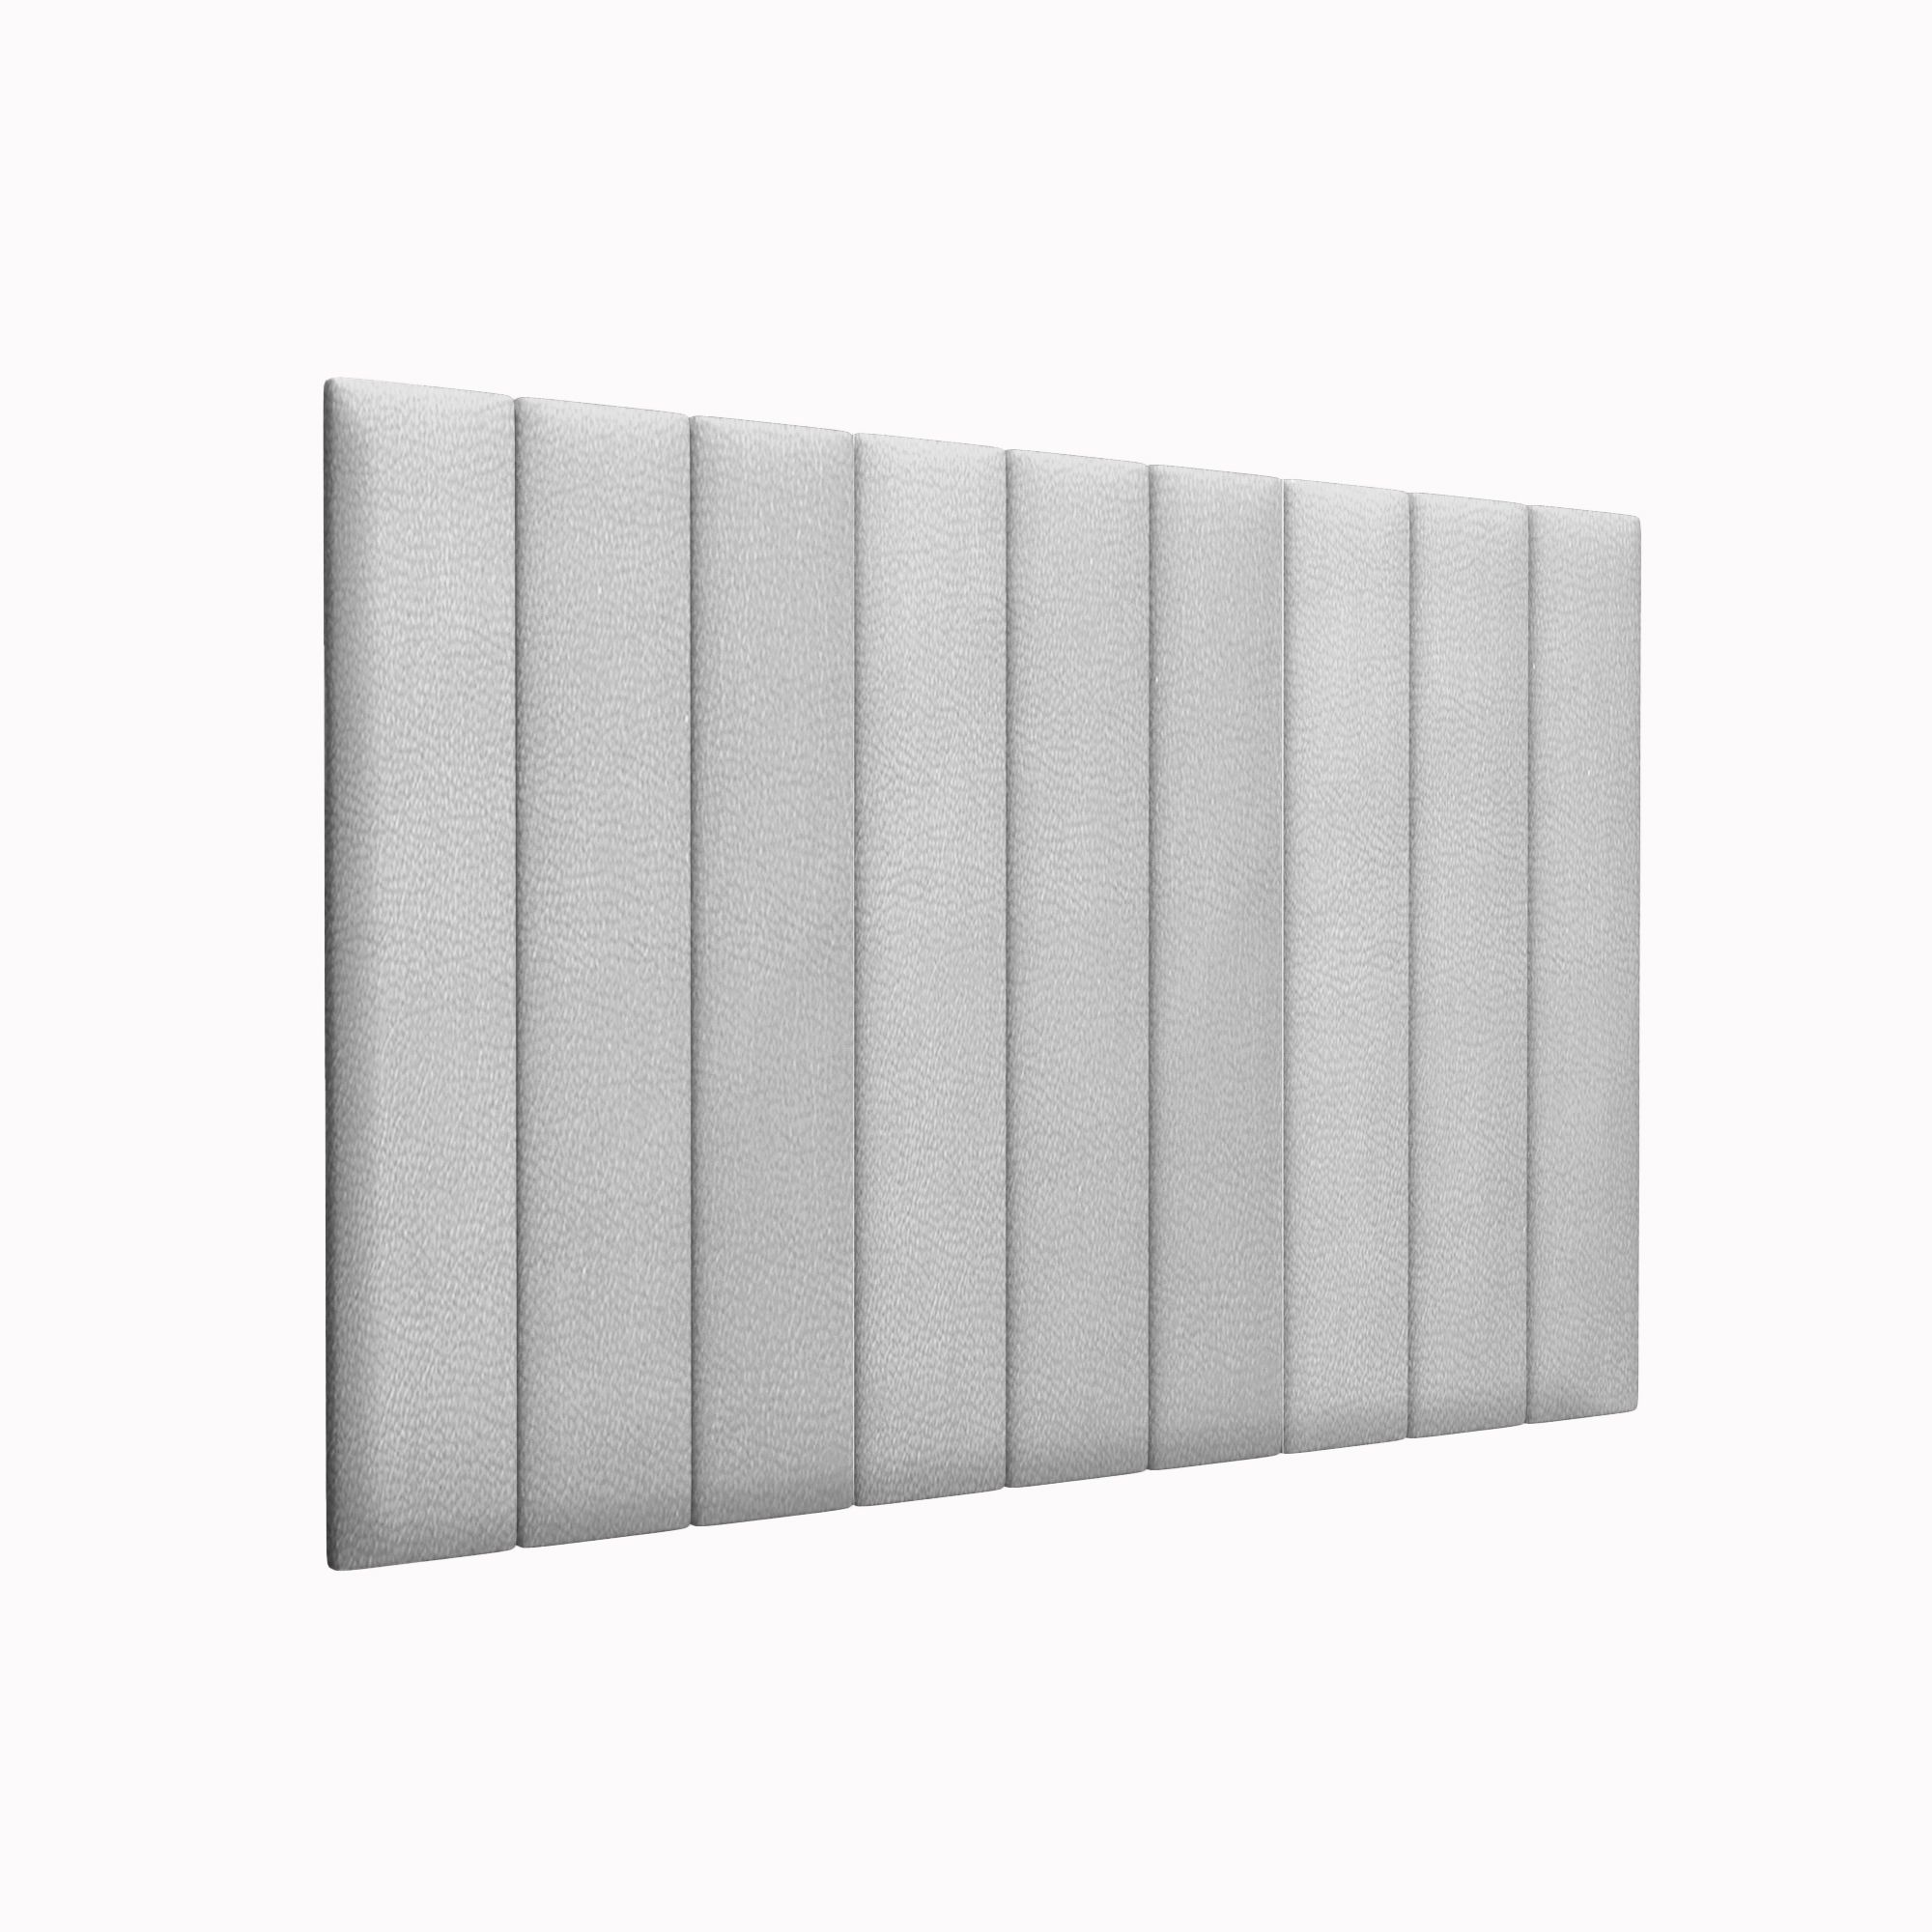 Мягкие стеновые панели Eco Leather Silver 15х90 см 2 шт.